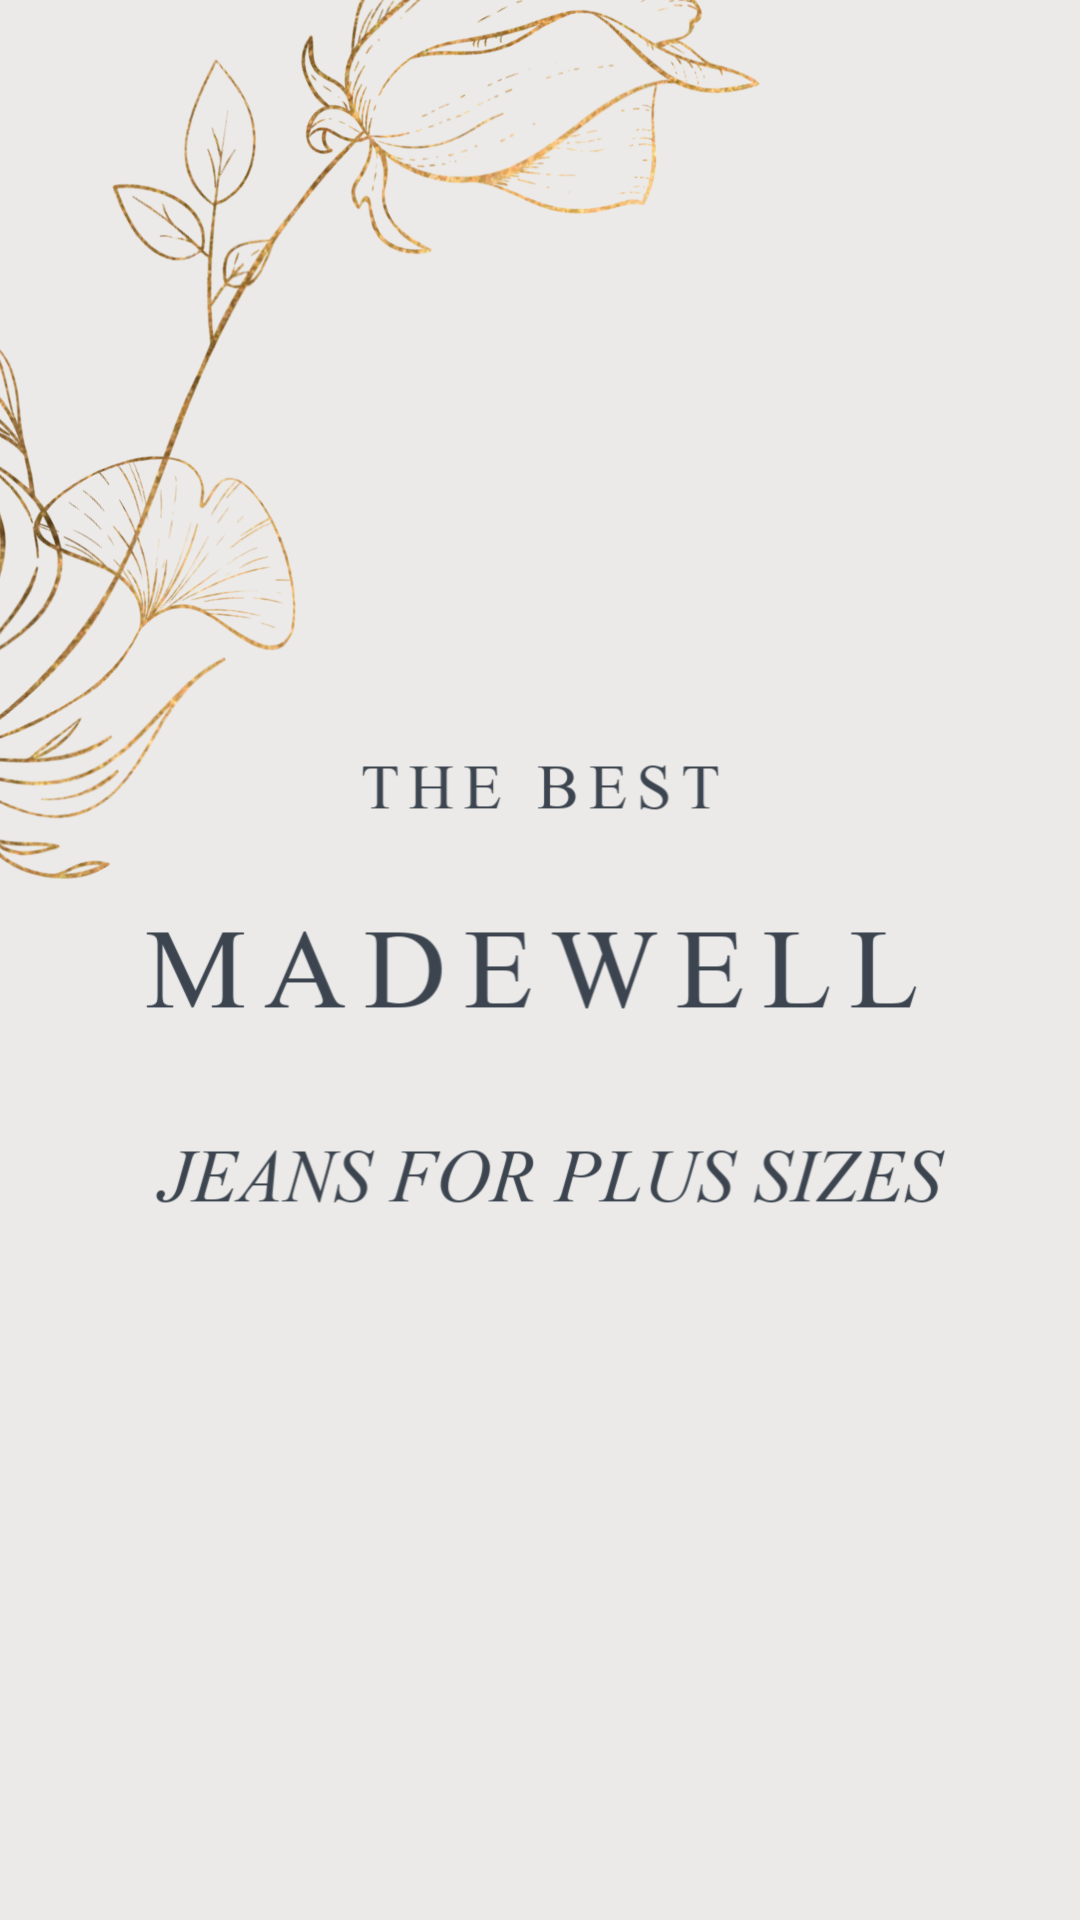 madewell plus sizes